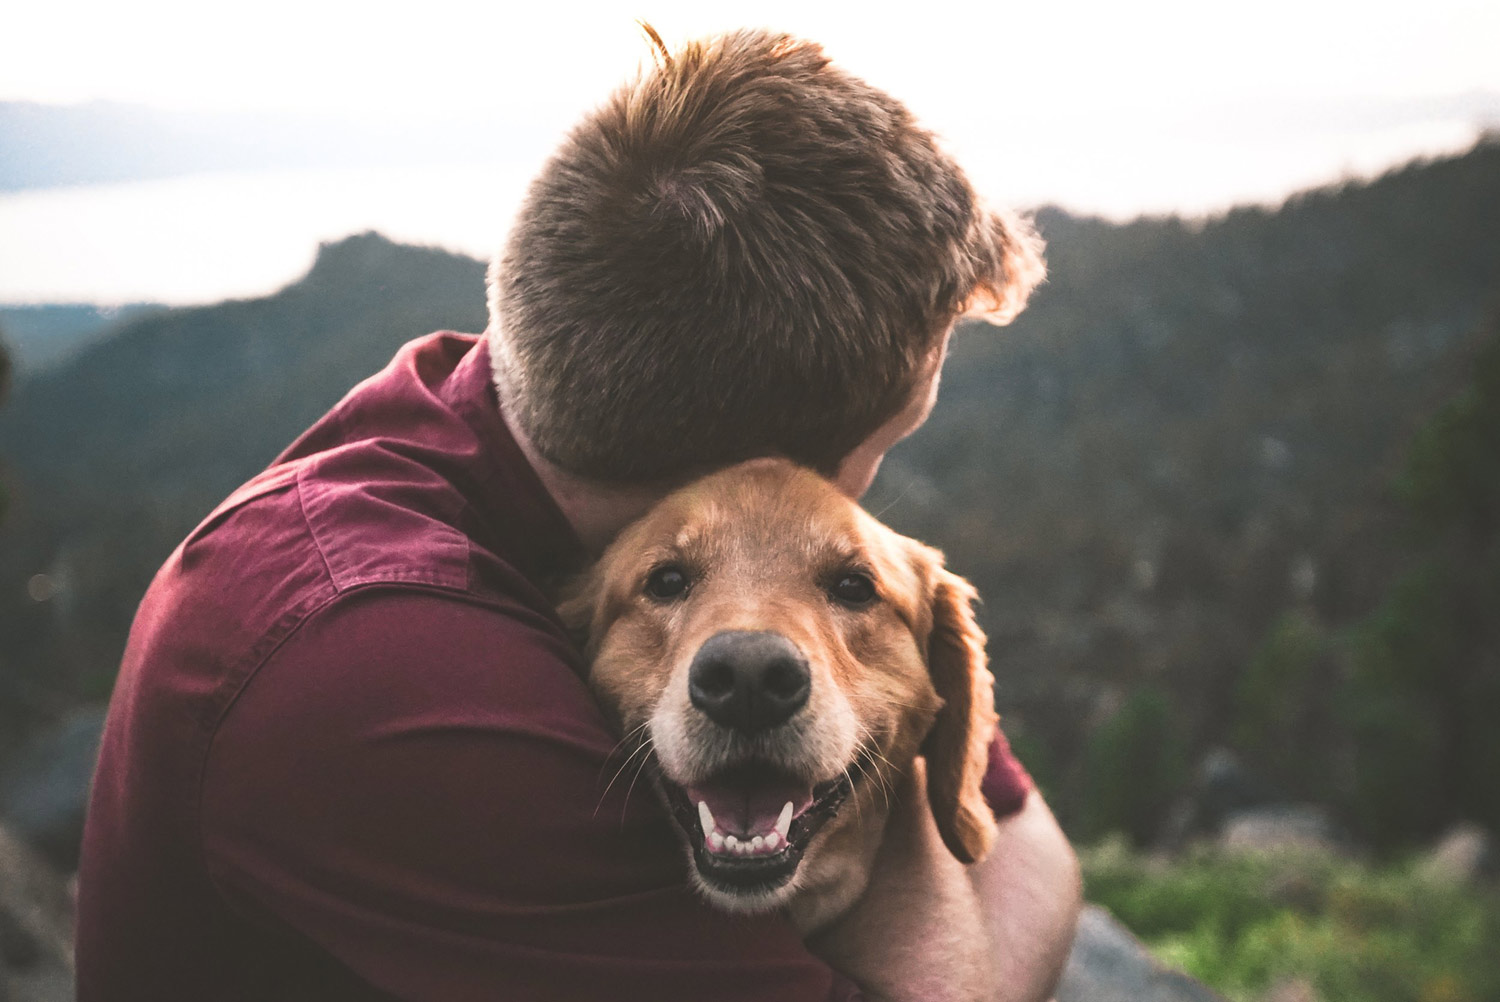 Man hugging a dog. Mental Health Awareness